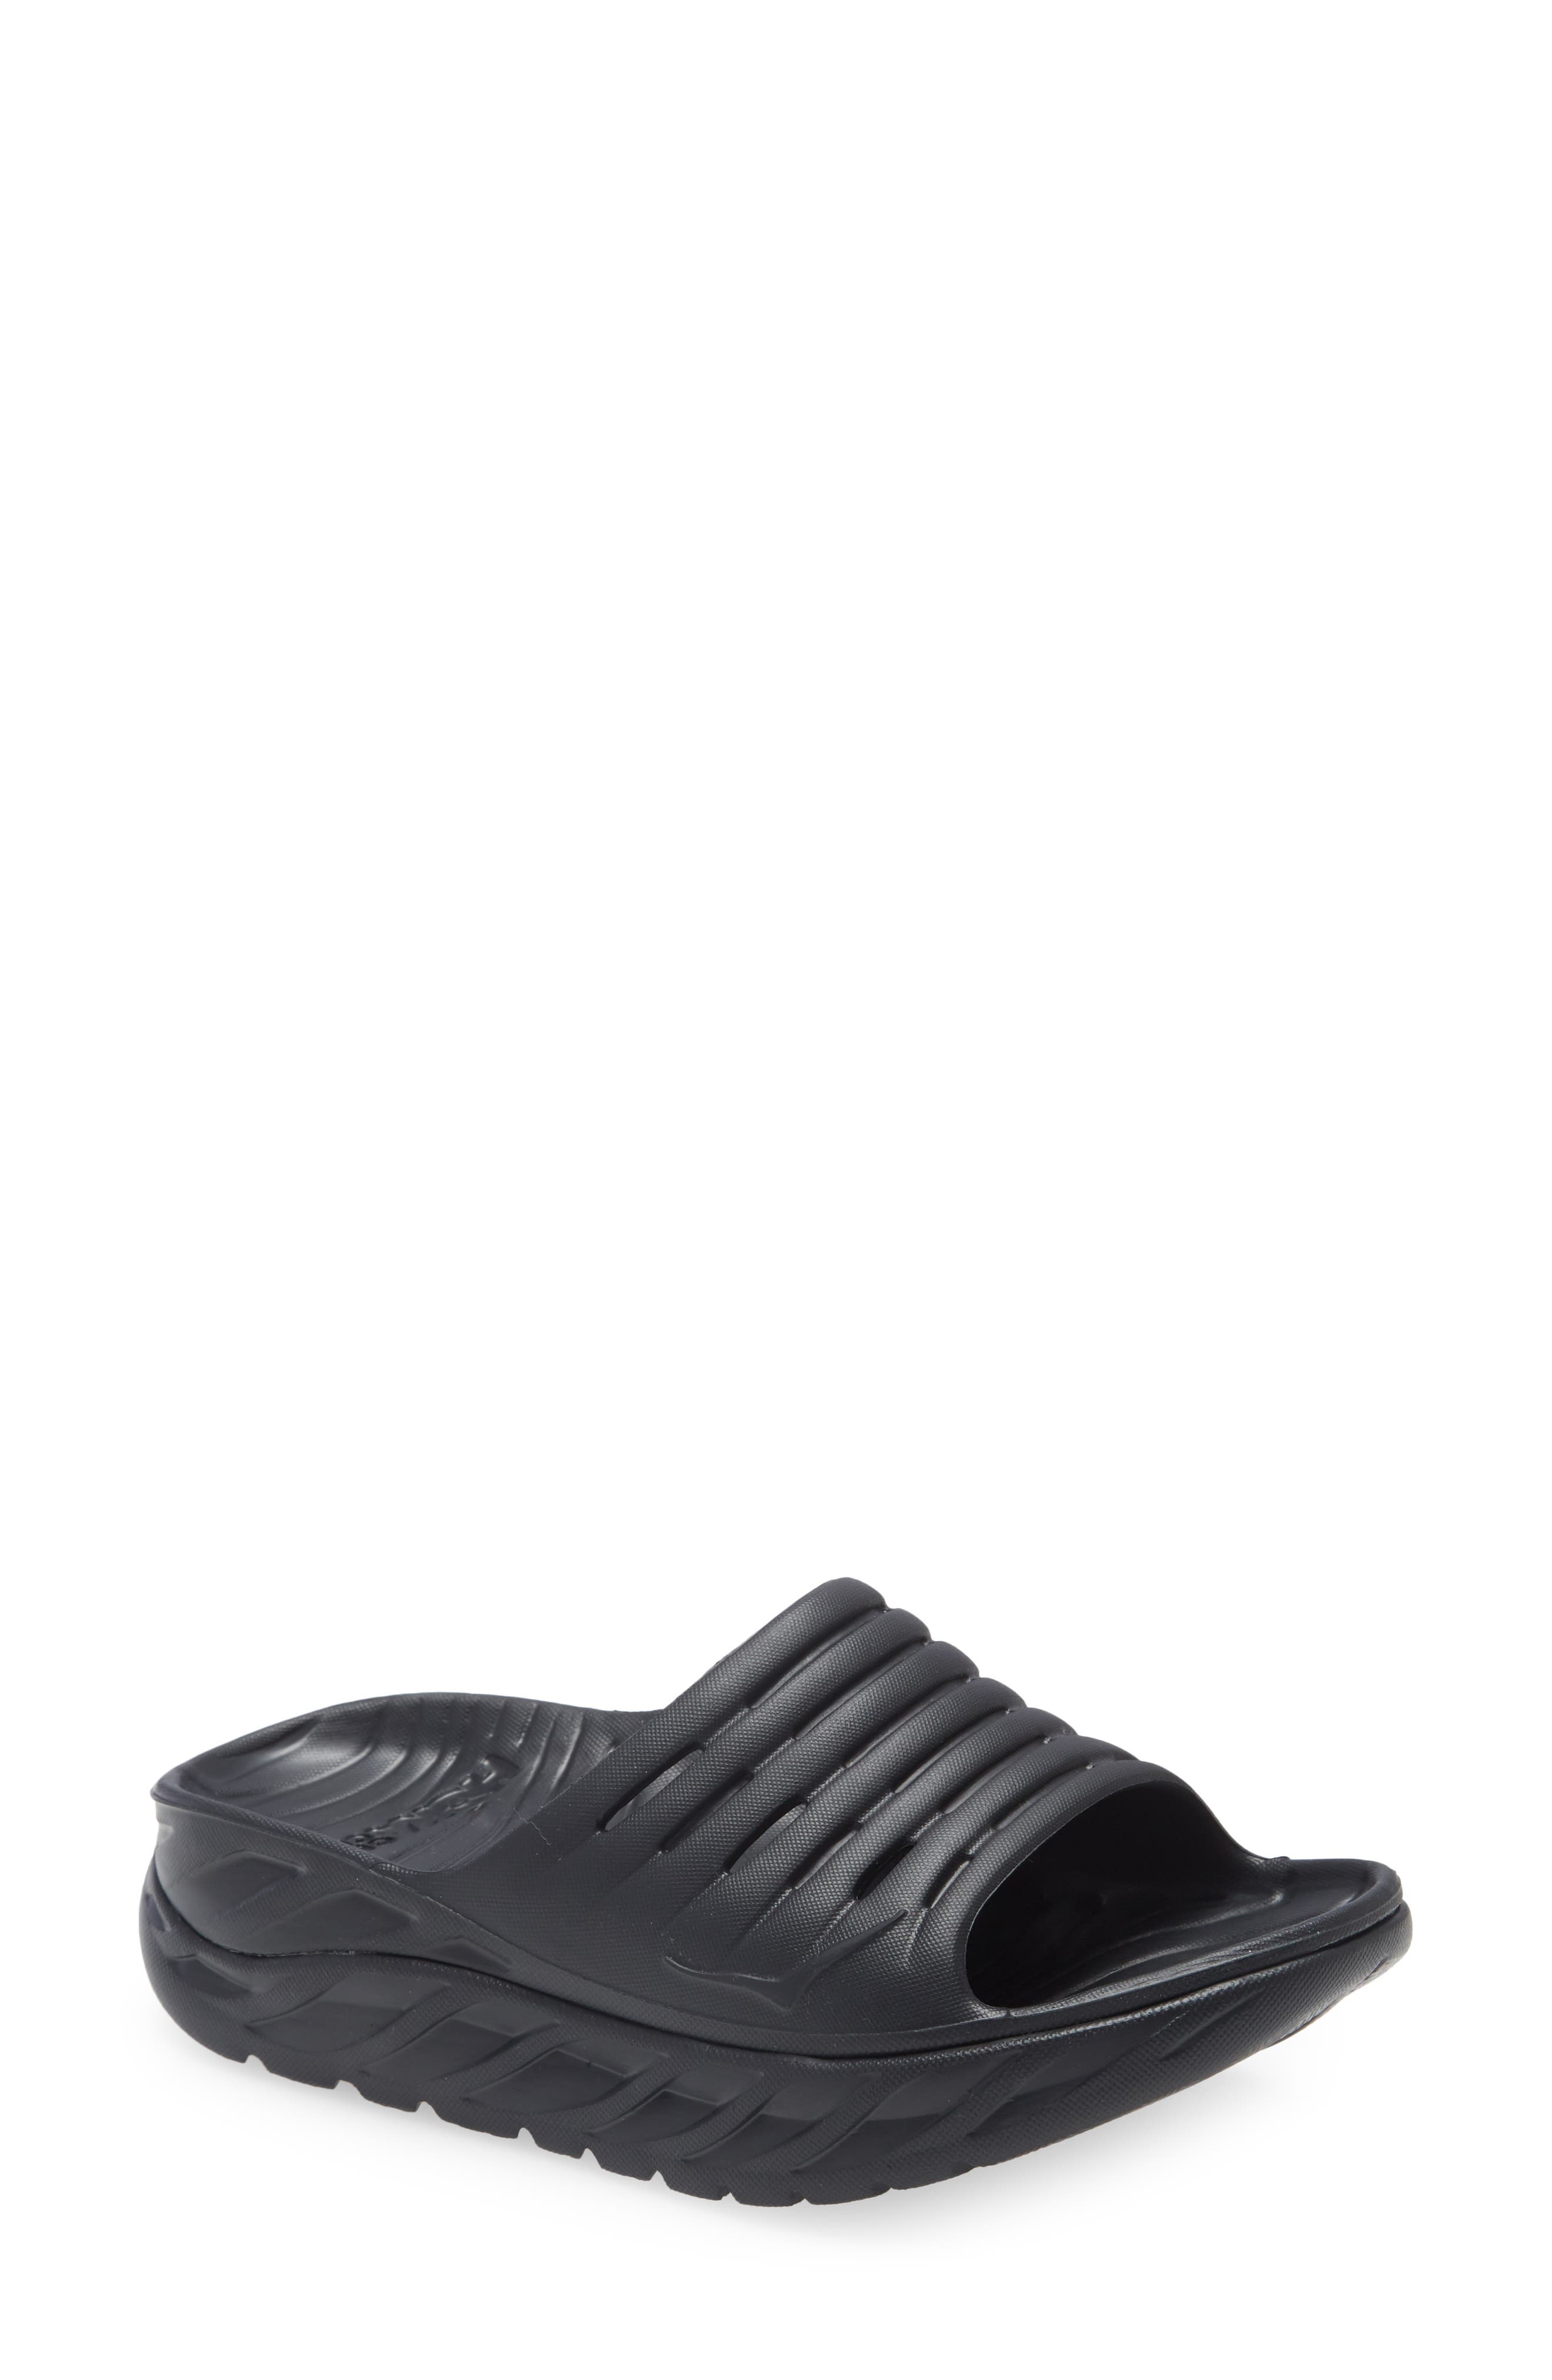 Mens K-Swiss Sliders Slip On Summer Flip Flops Sandals Pool Gym Shoes Size 